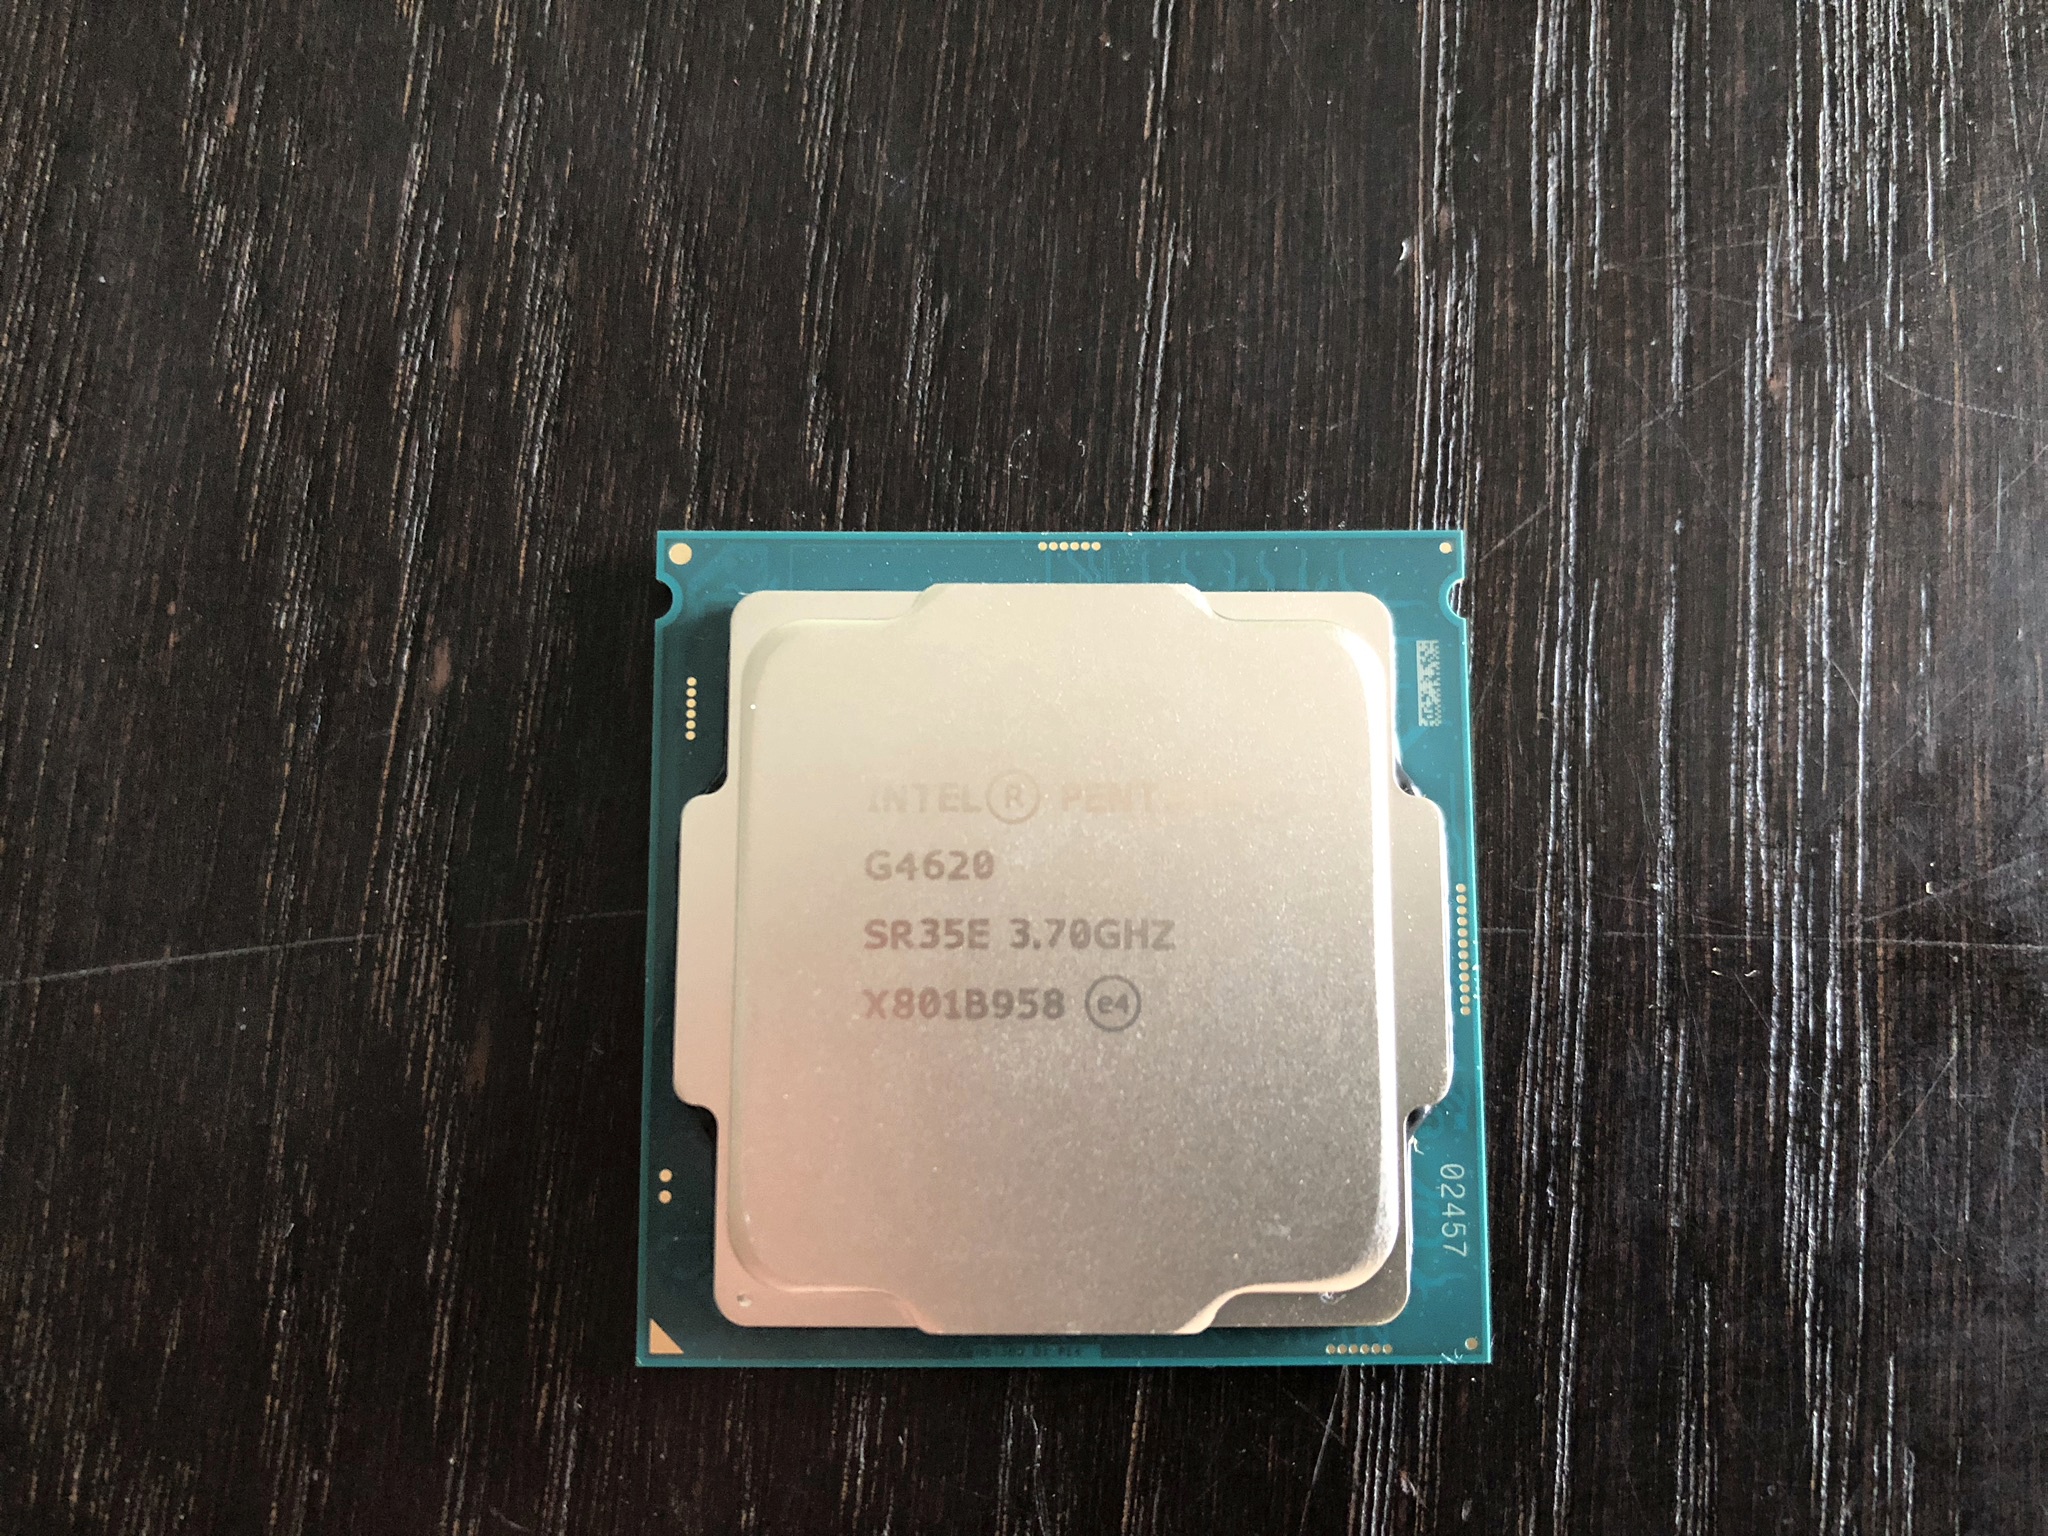 Intel g4620. Процессор Intel Pentium g4620. Intel Core i3 8100, LGA 1151v2, OEM. Процессор Intel Core i3 8100 lga1151 OEM. Intel Pentium 4620.